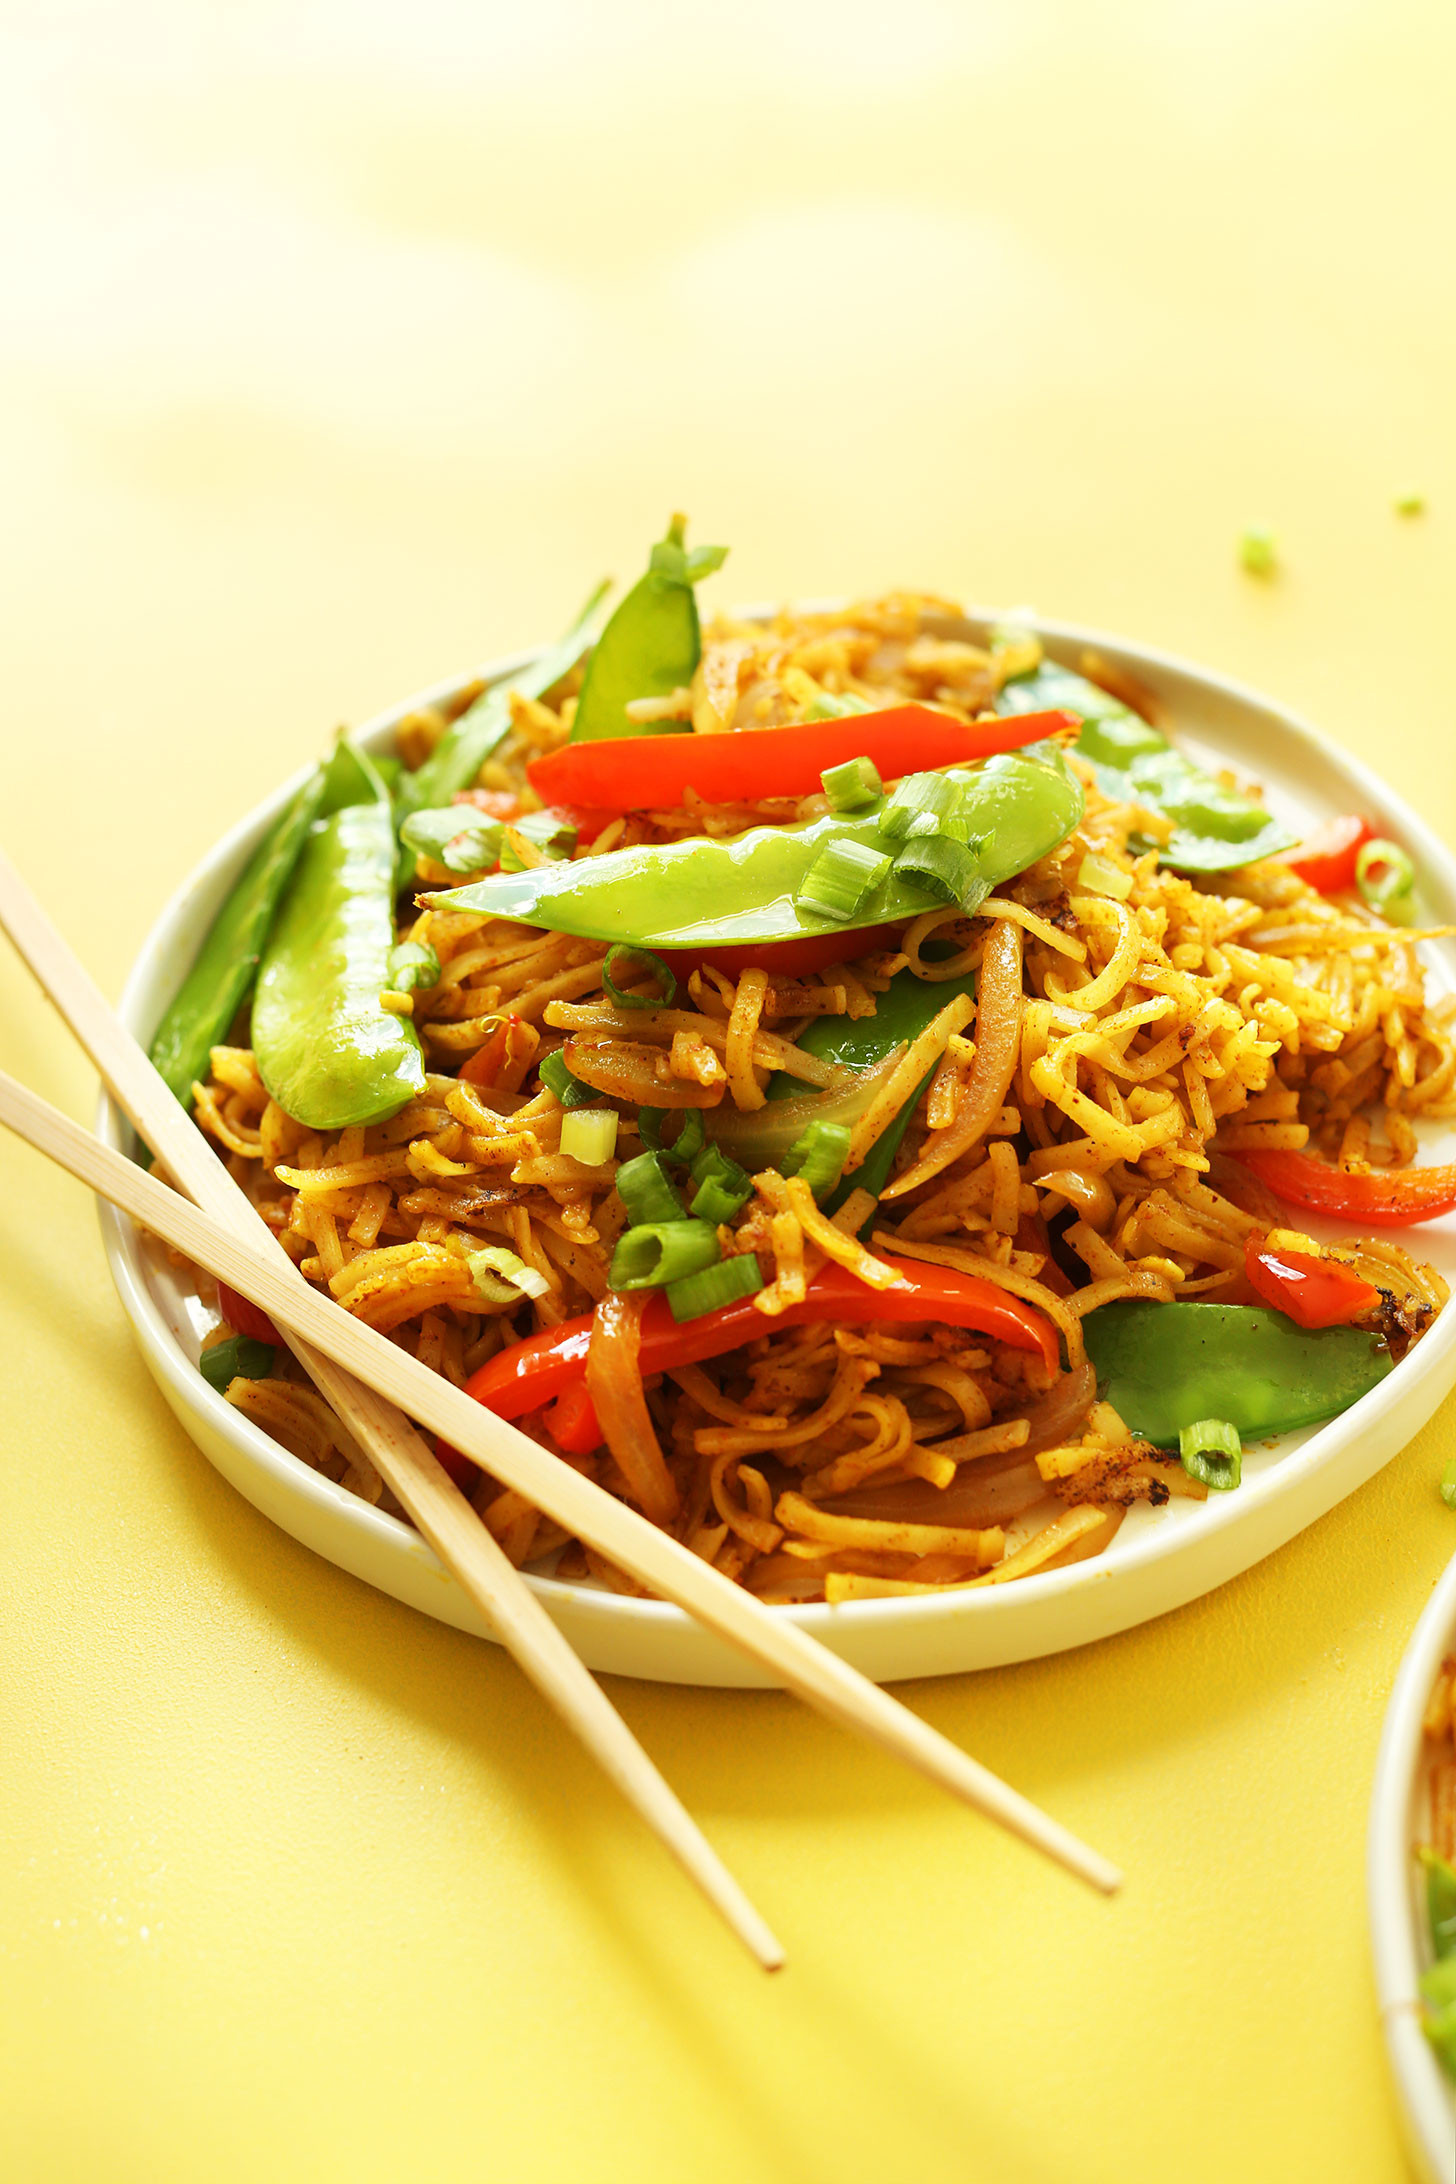 Vegetarian Noodle Recipes
 EASY Vegan Singapore Noodles 10 ingre nts simple